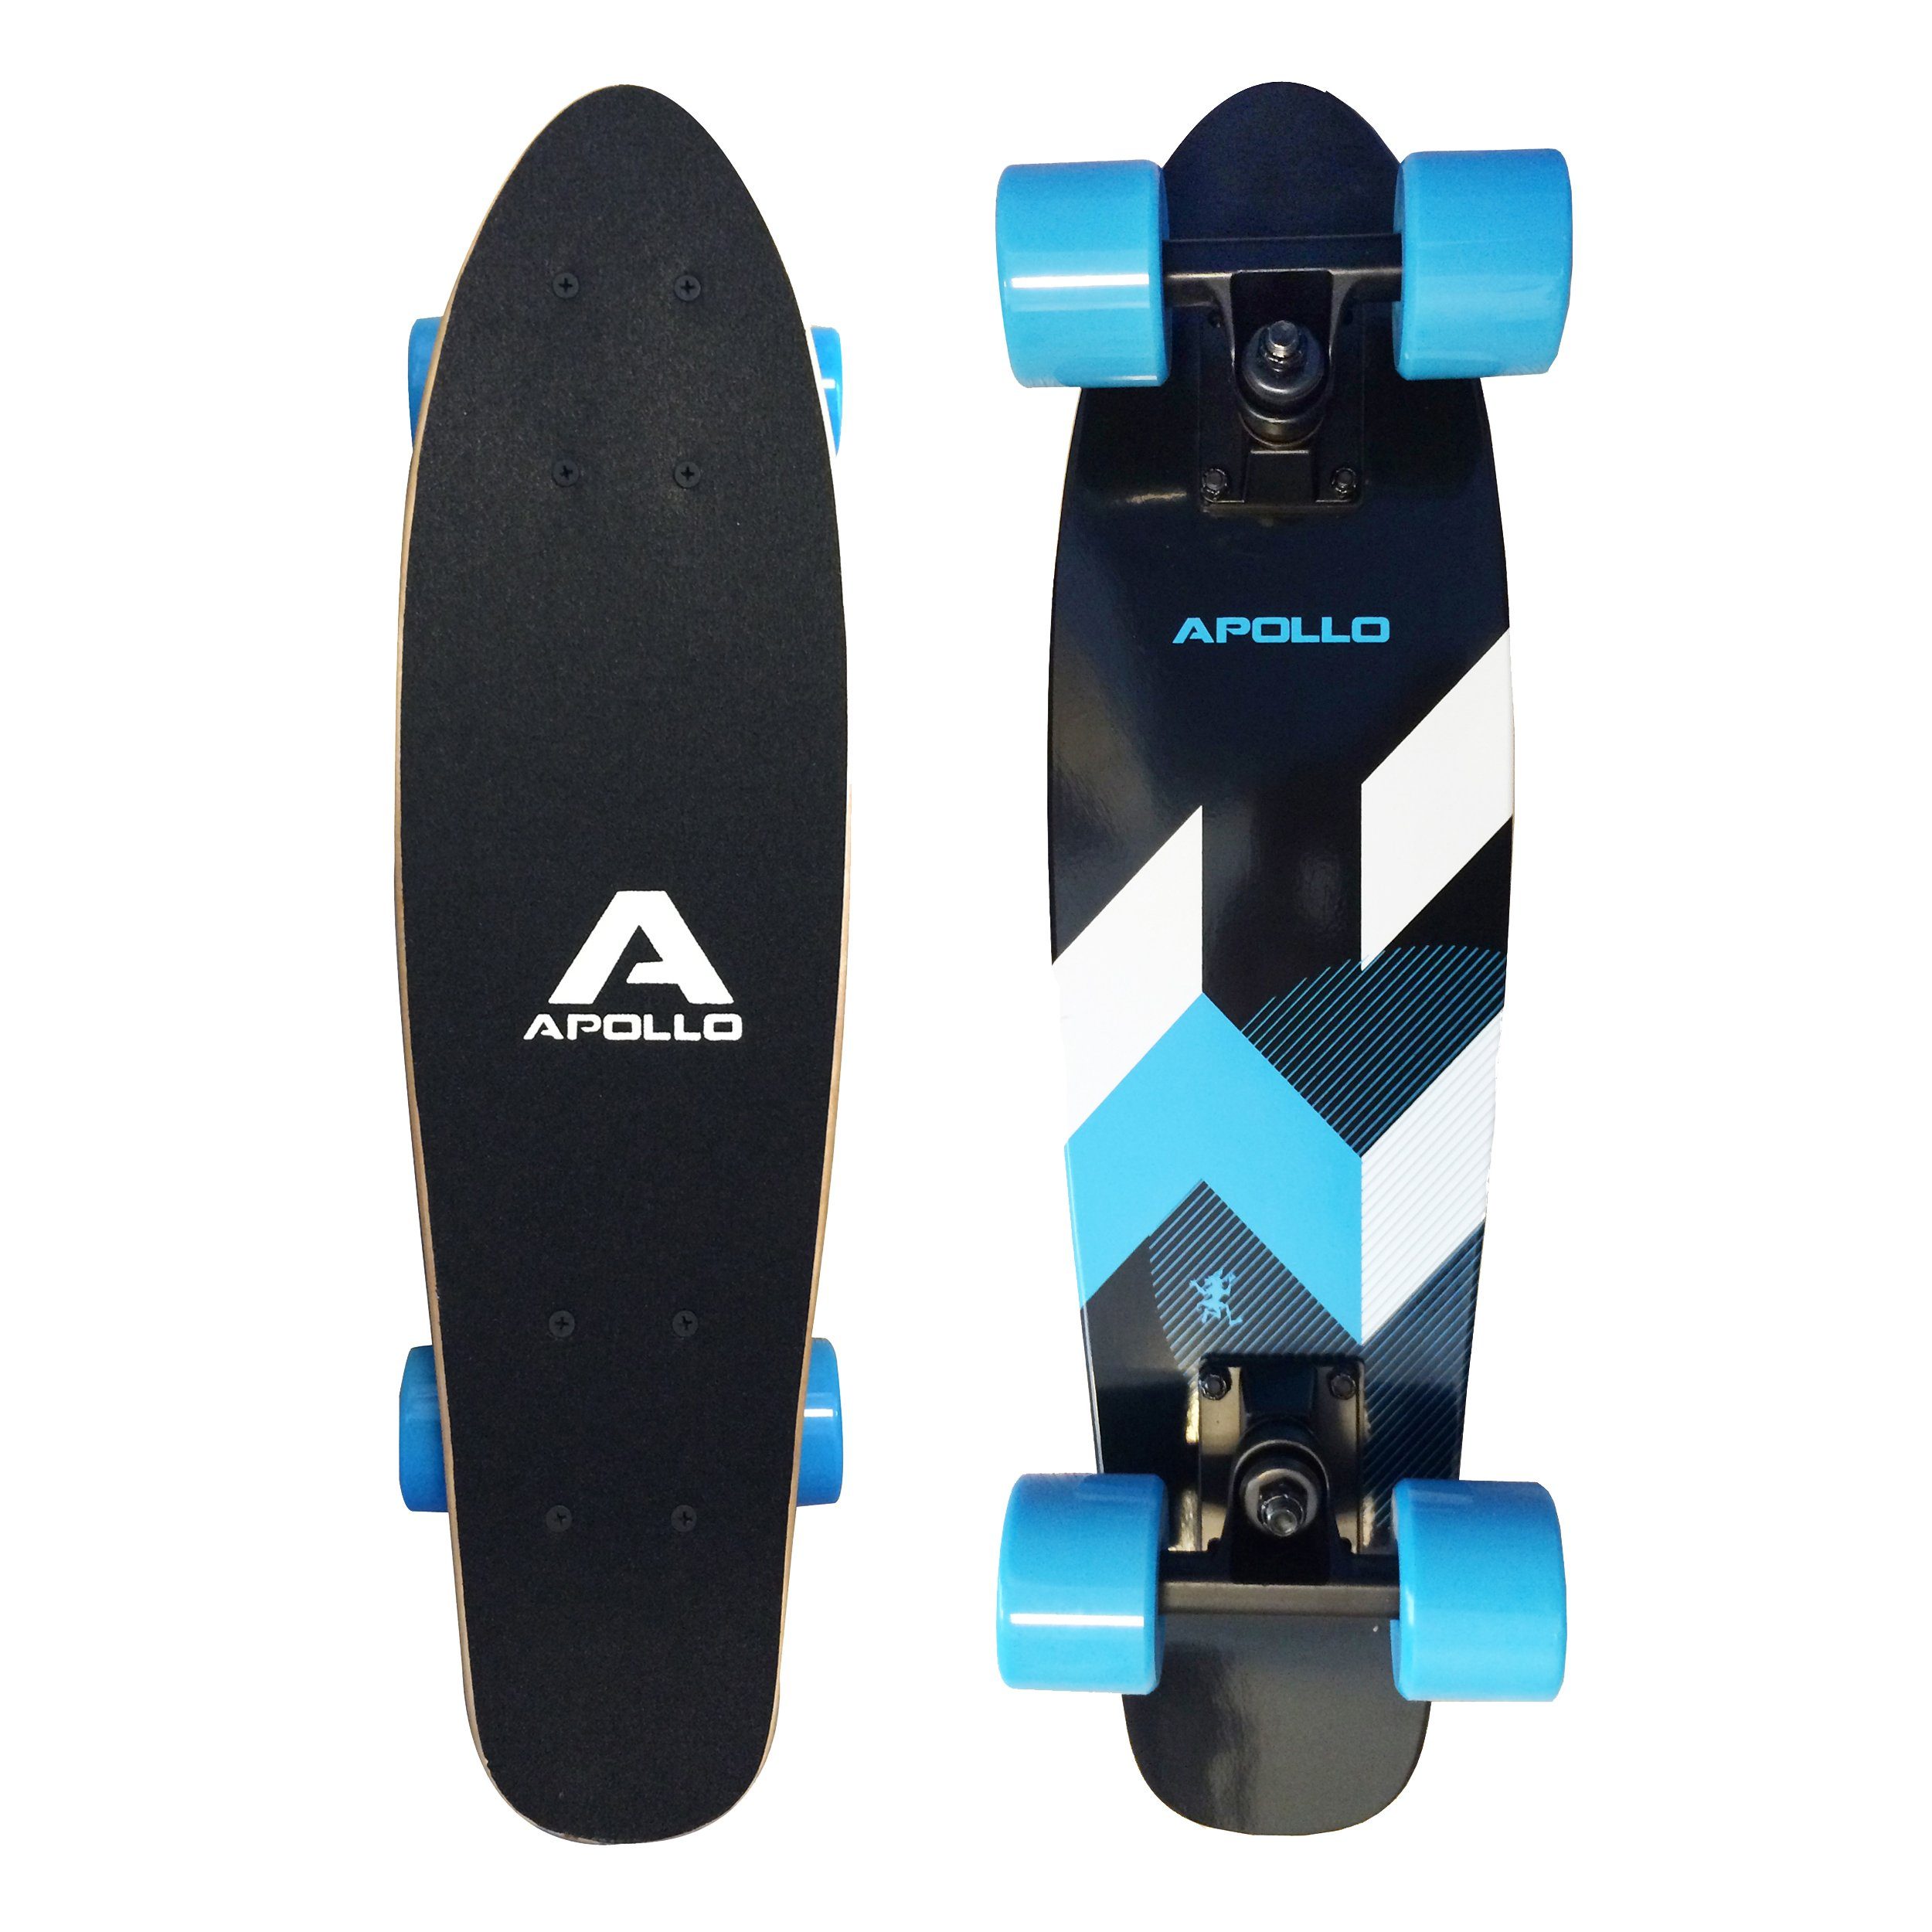 Apollo Miniskateboard Fancyboard Classic Blue 22", kompakt mit hochwertiger Verarbeitung Matei